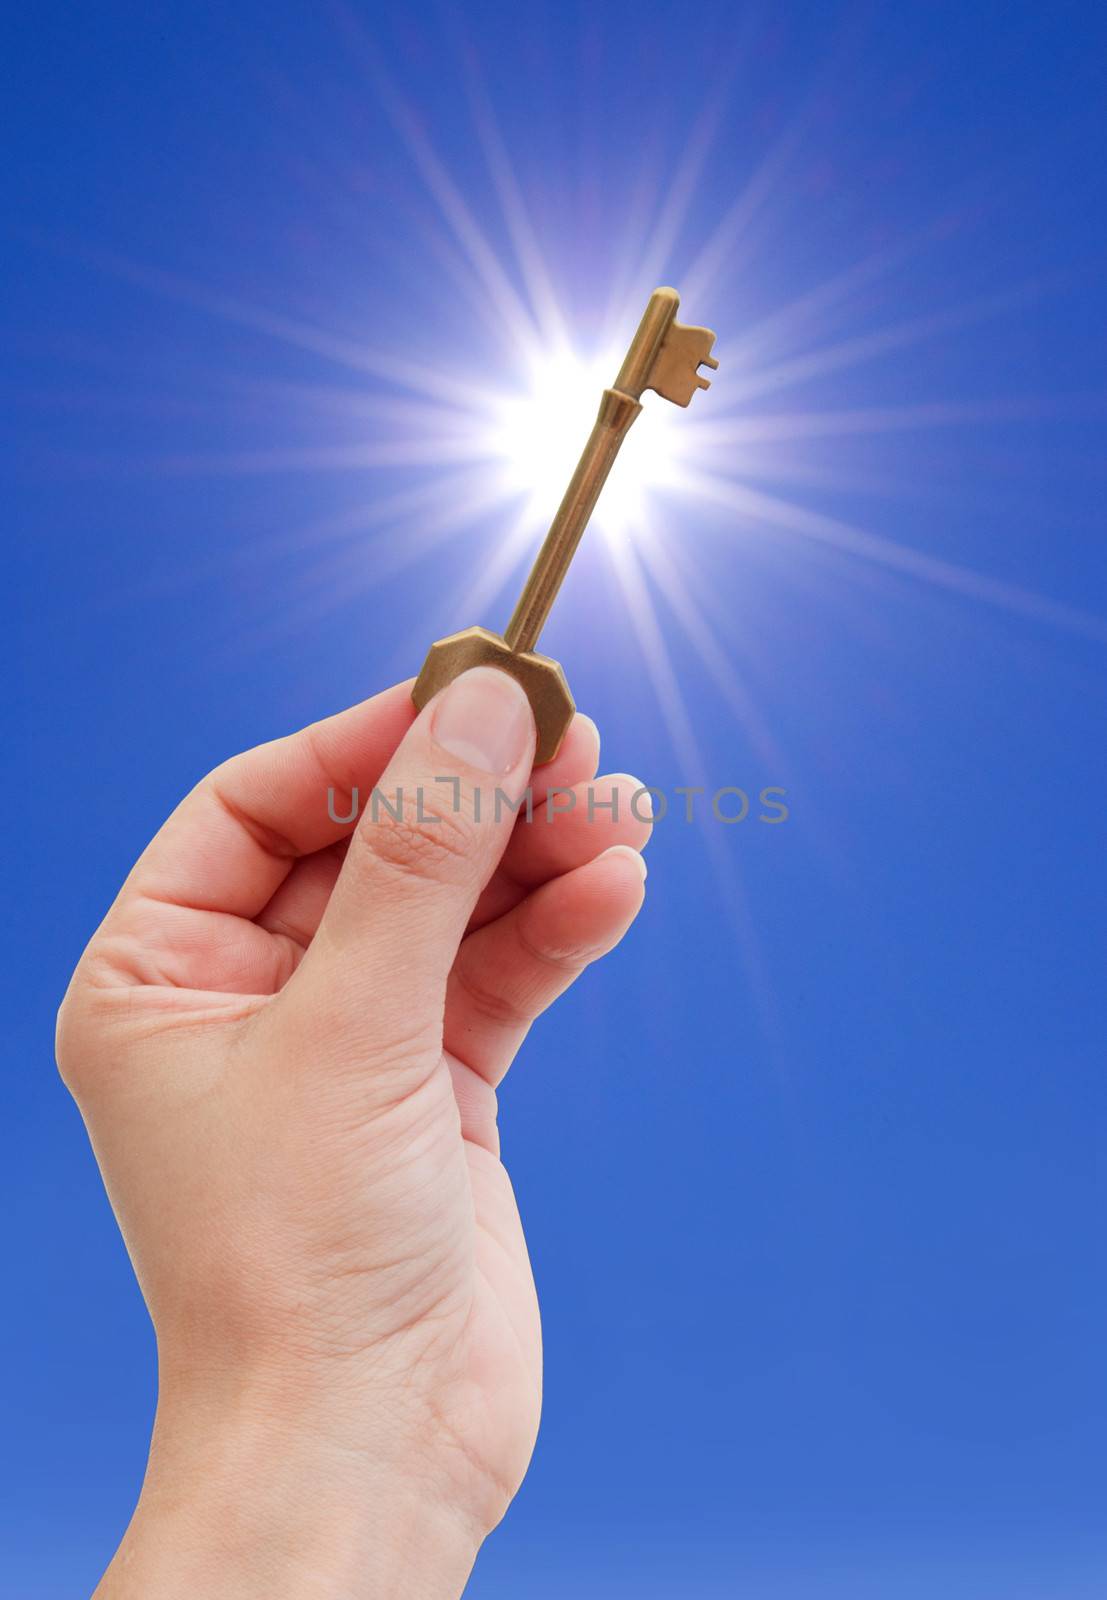 Hand holding a golden key against sky